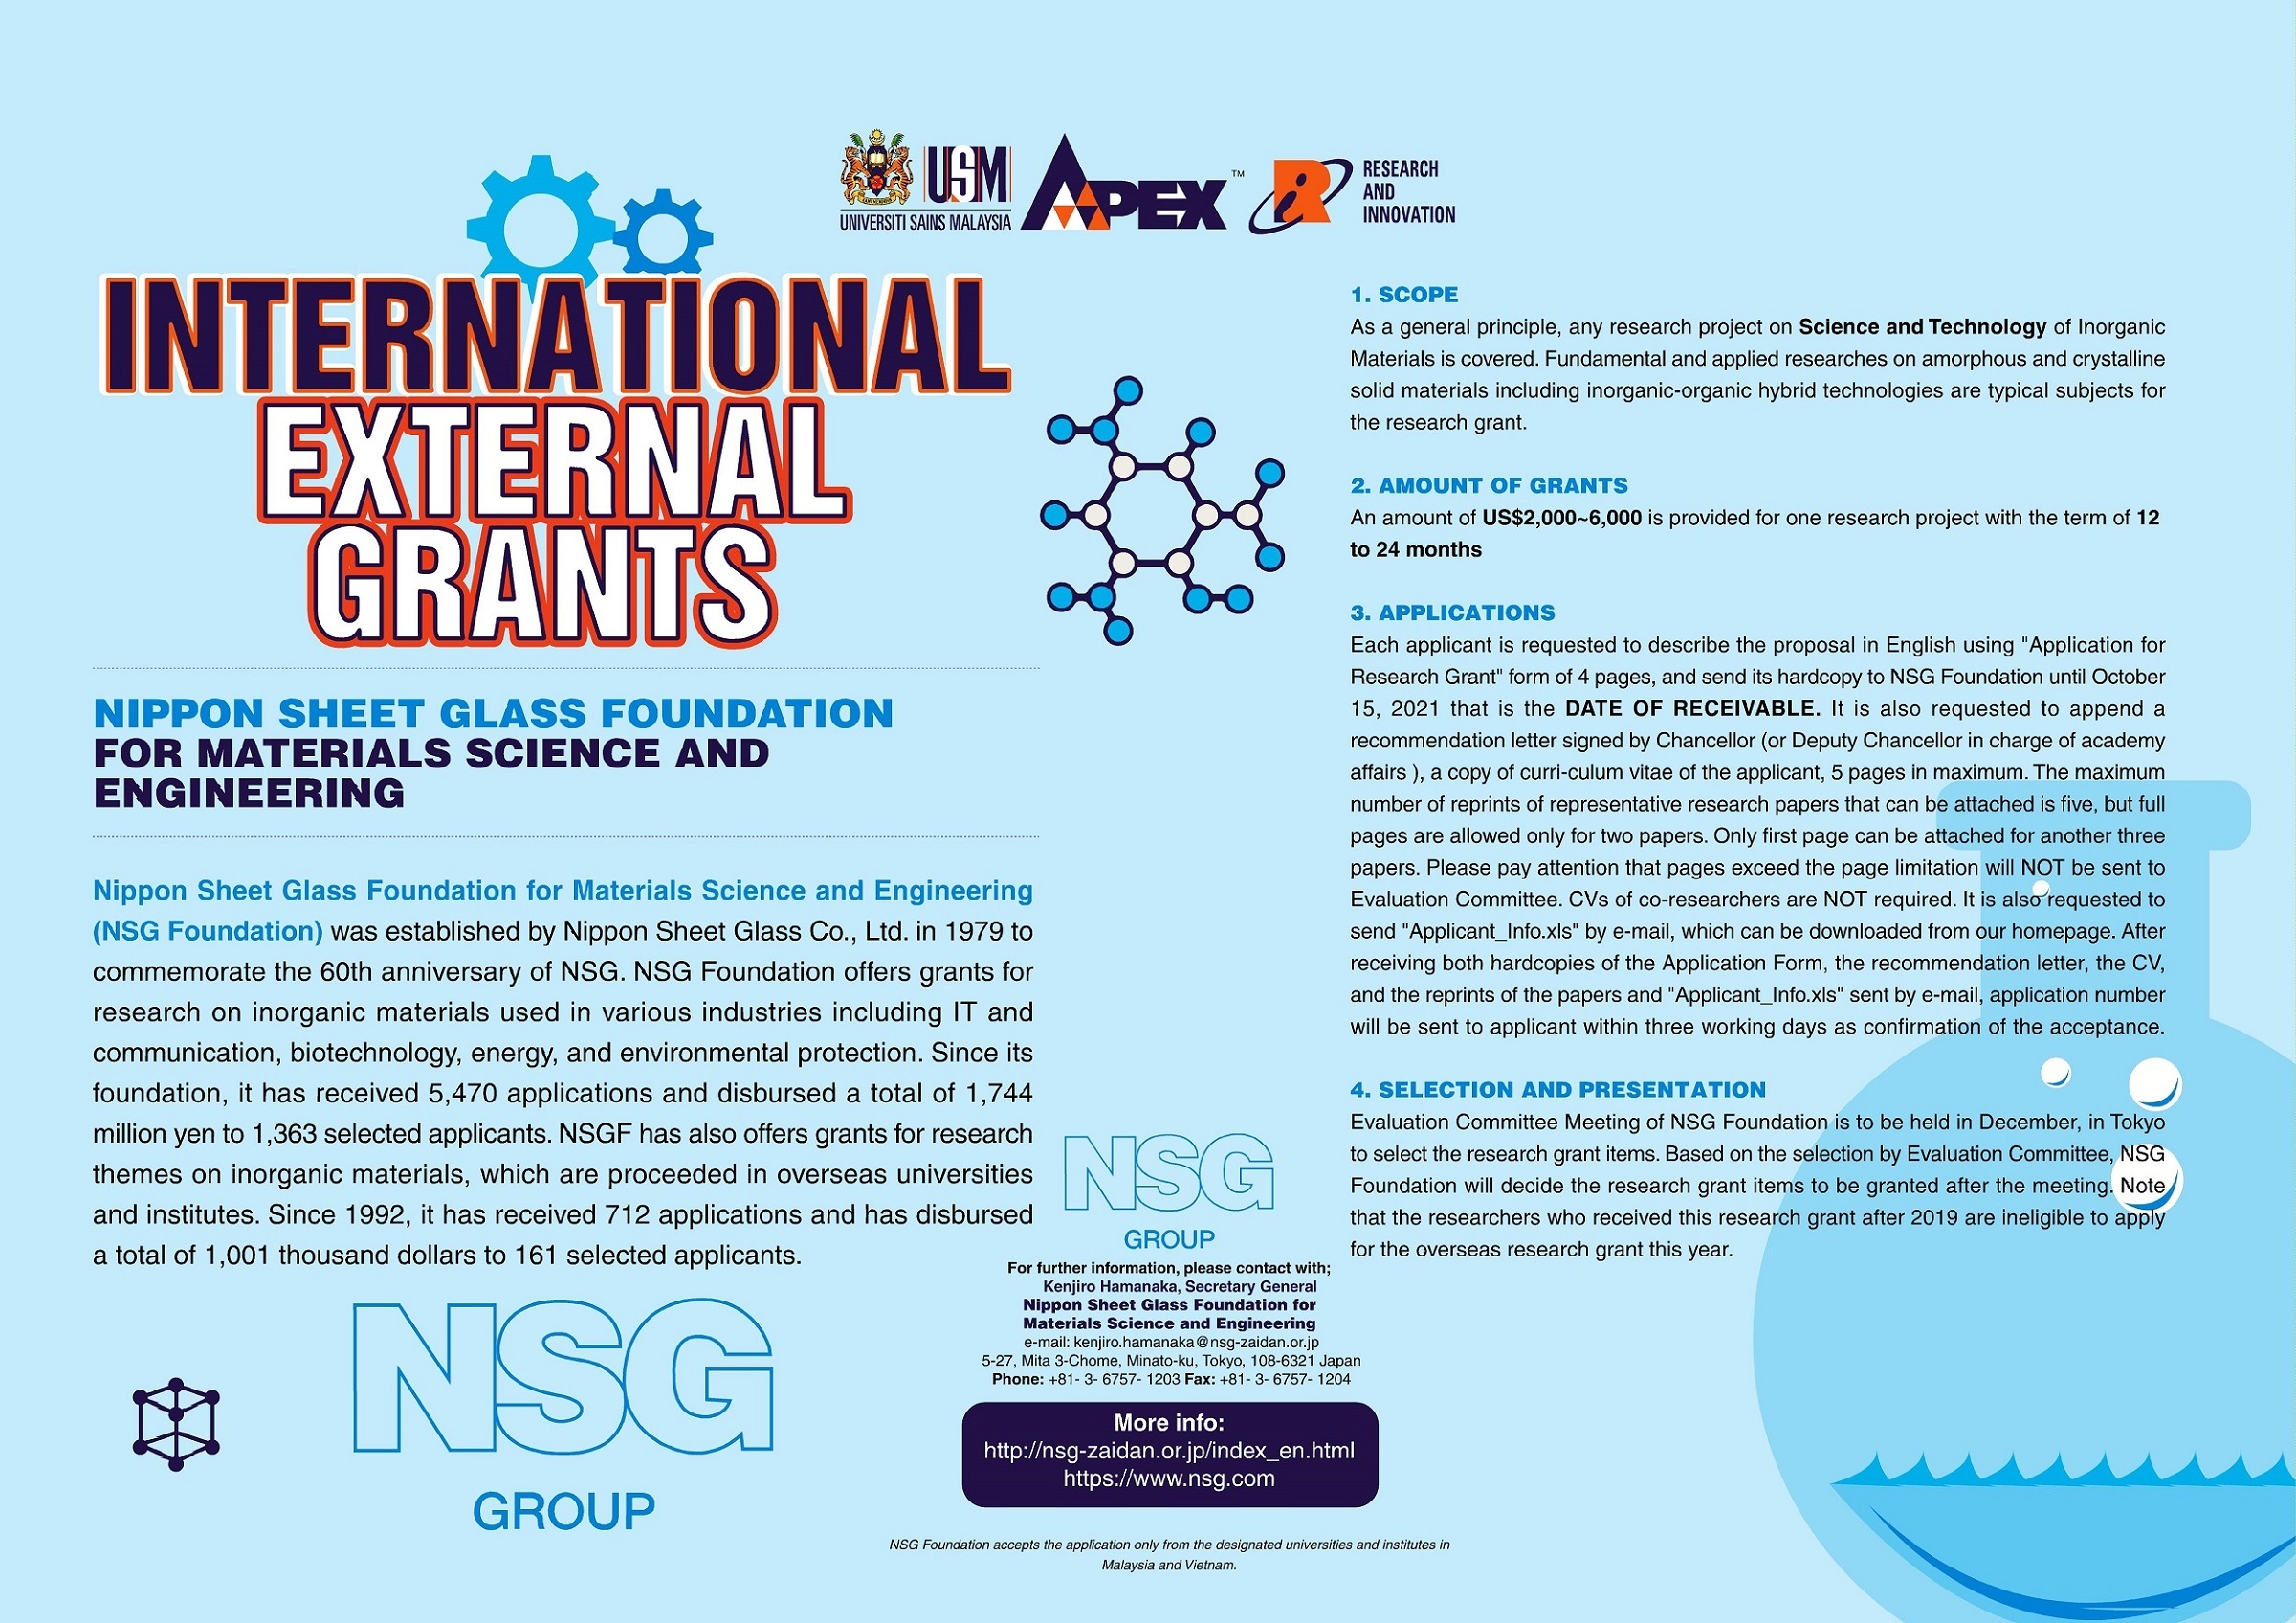 Poster External Grants International NSG edited